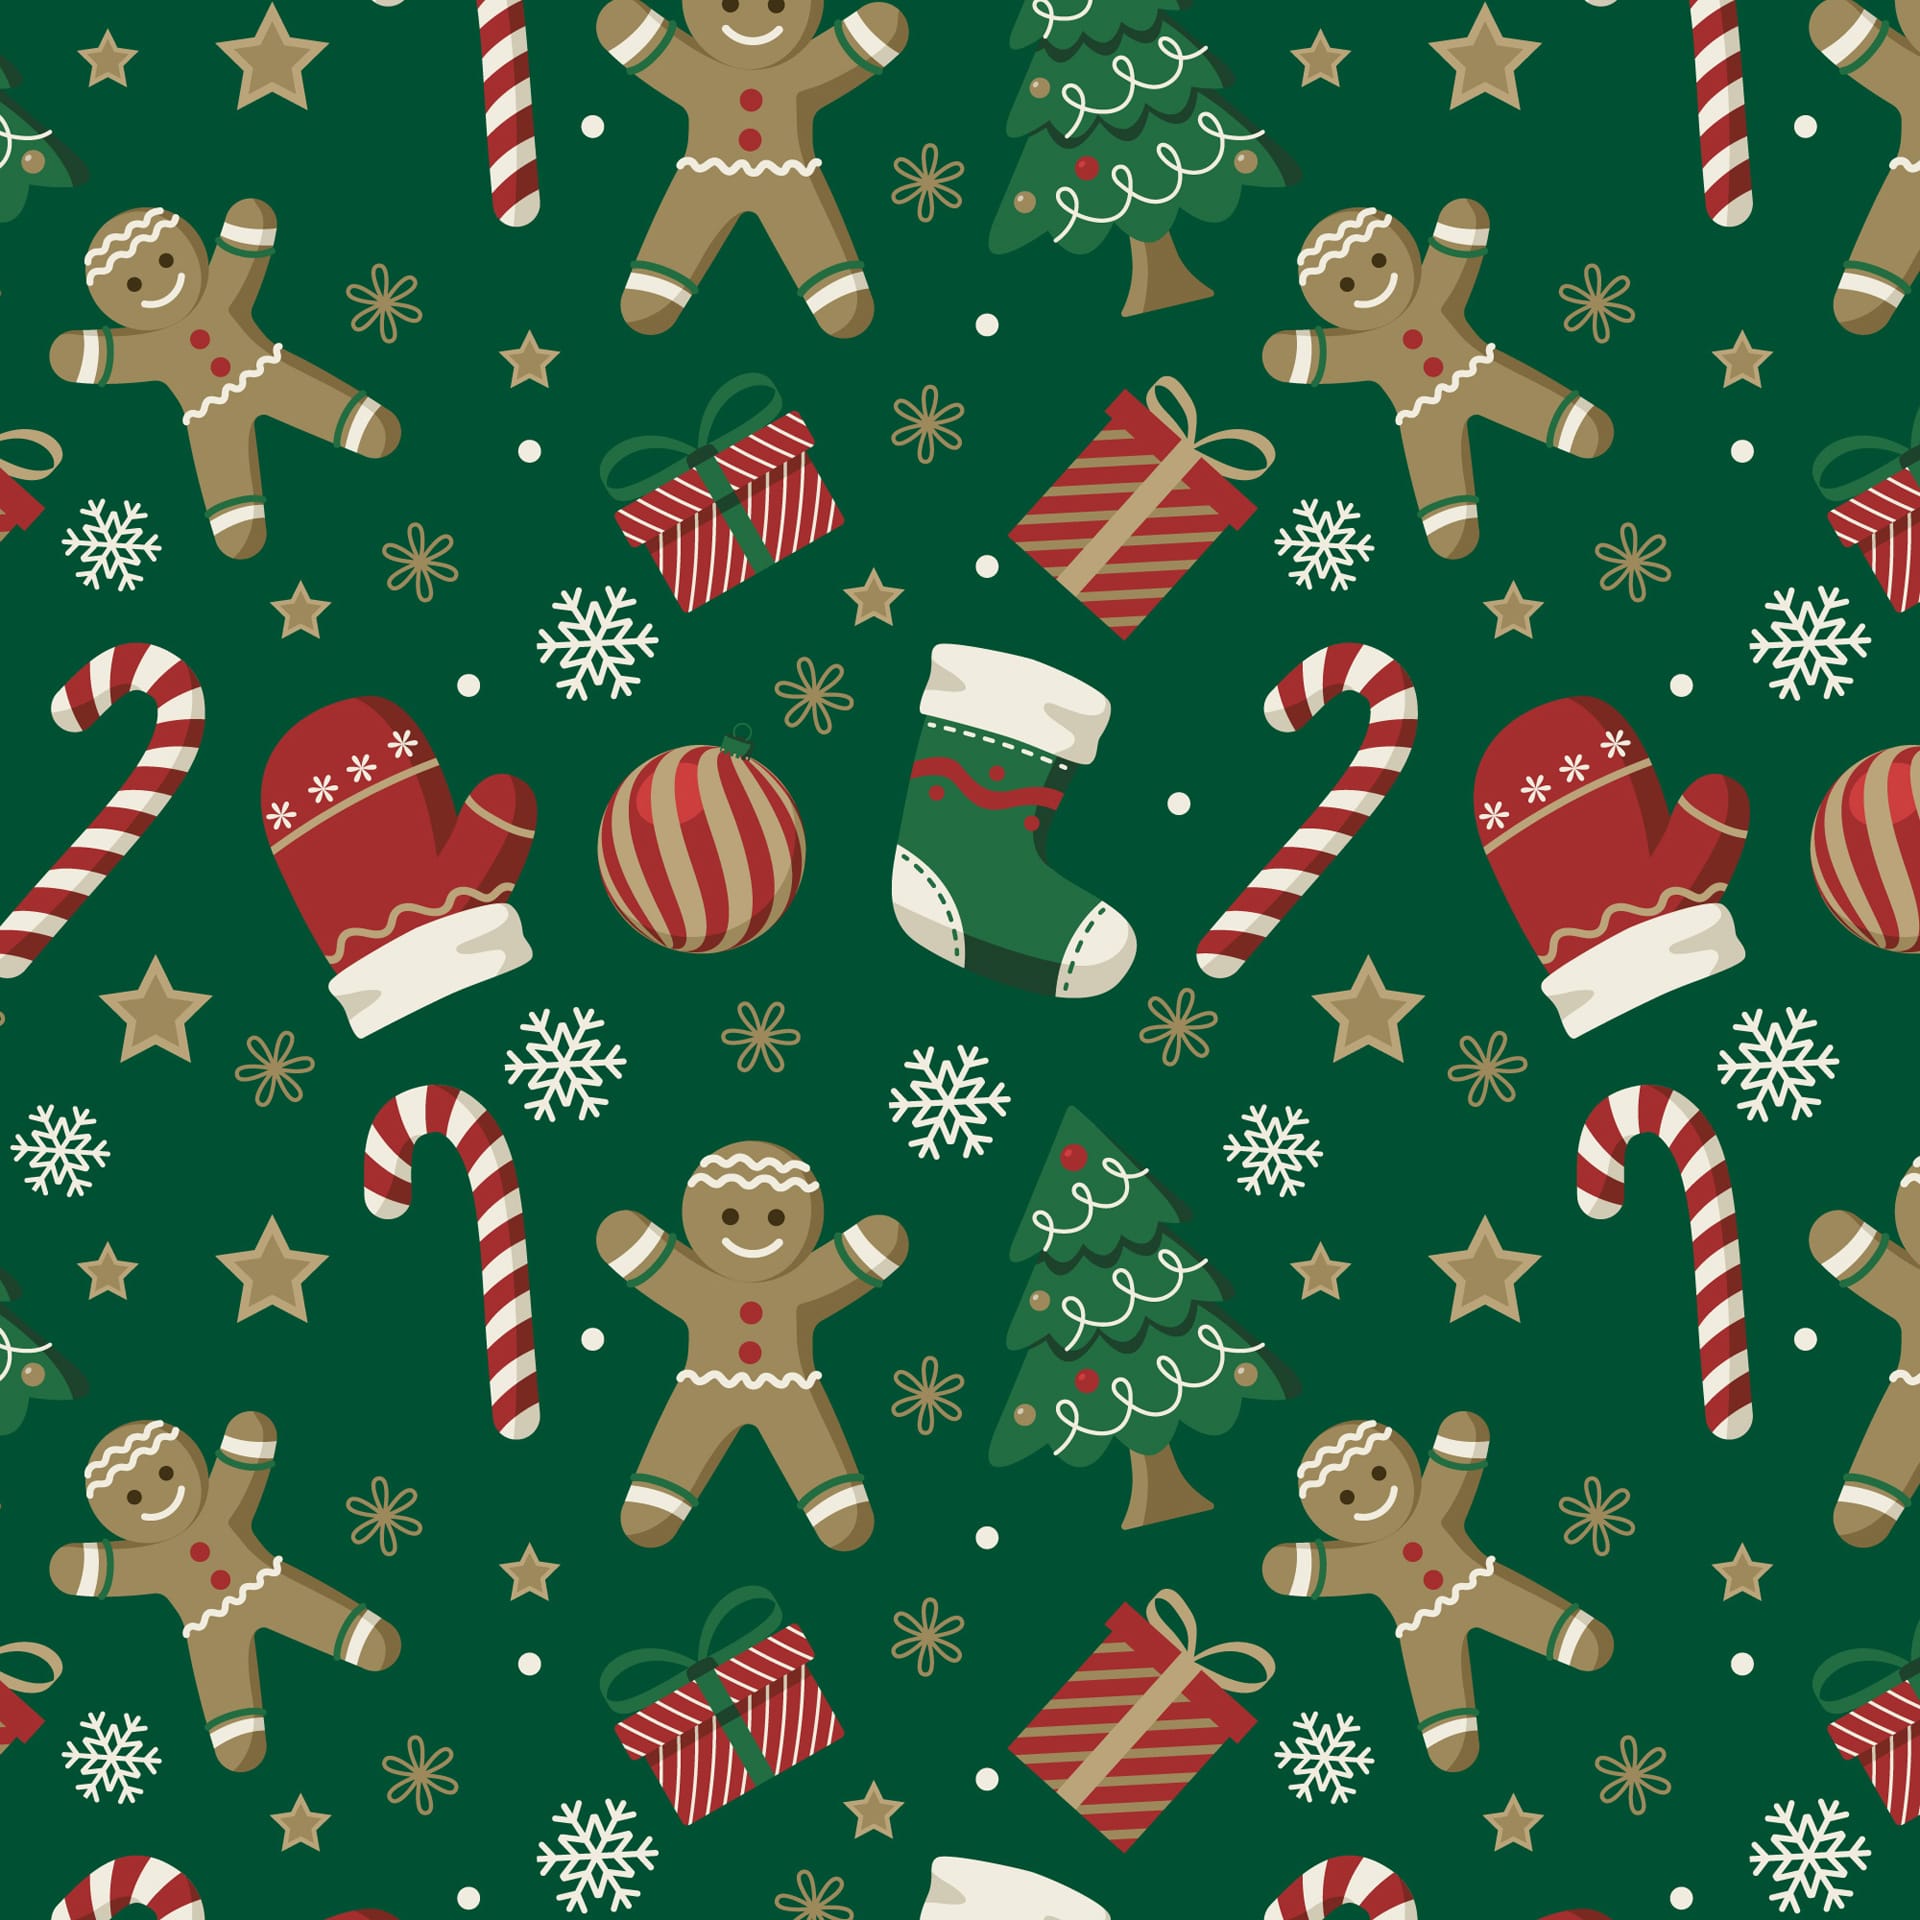 Flat christmas season pattern design image